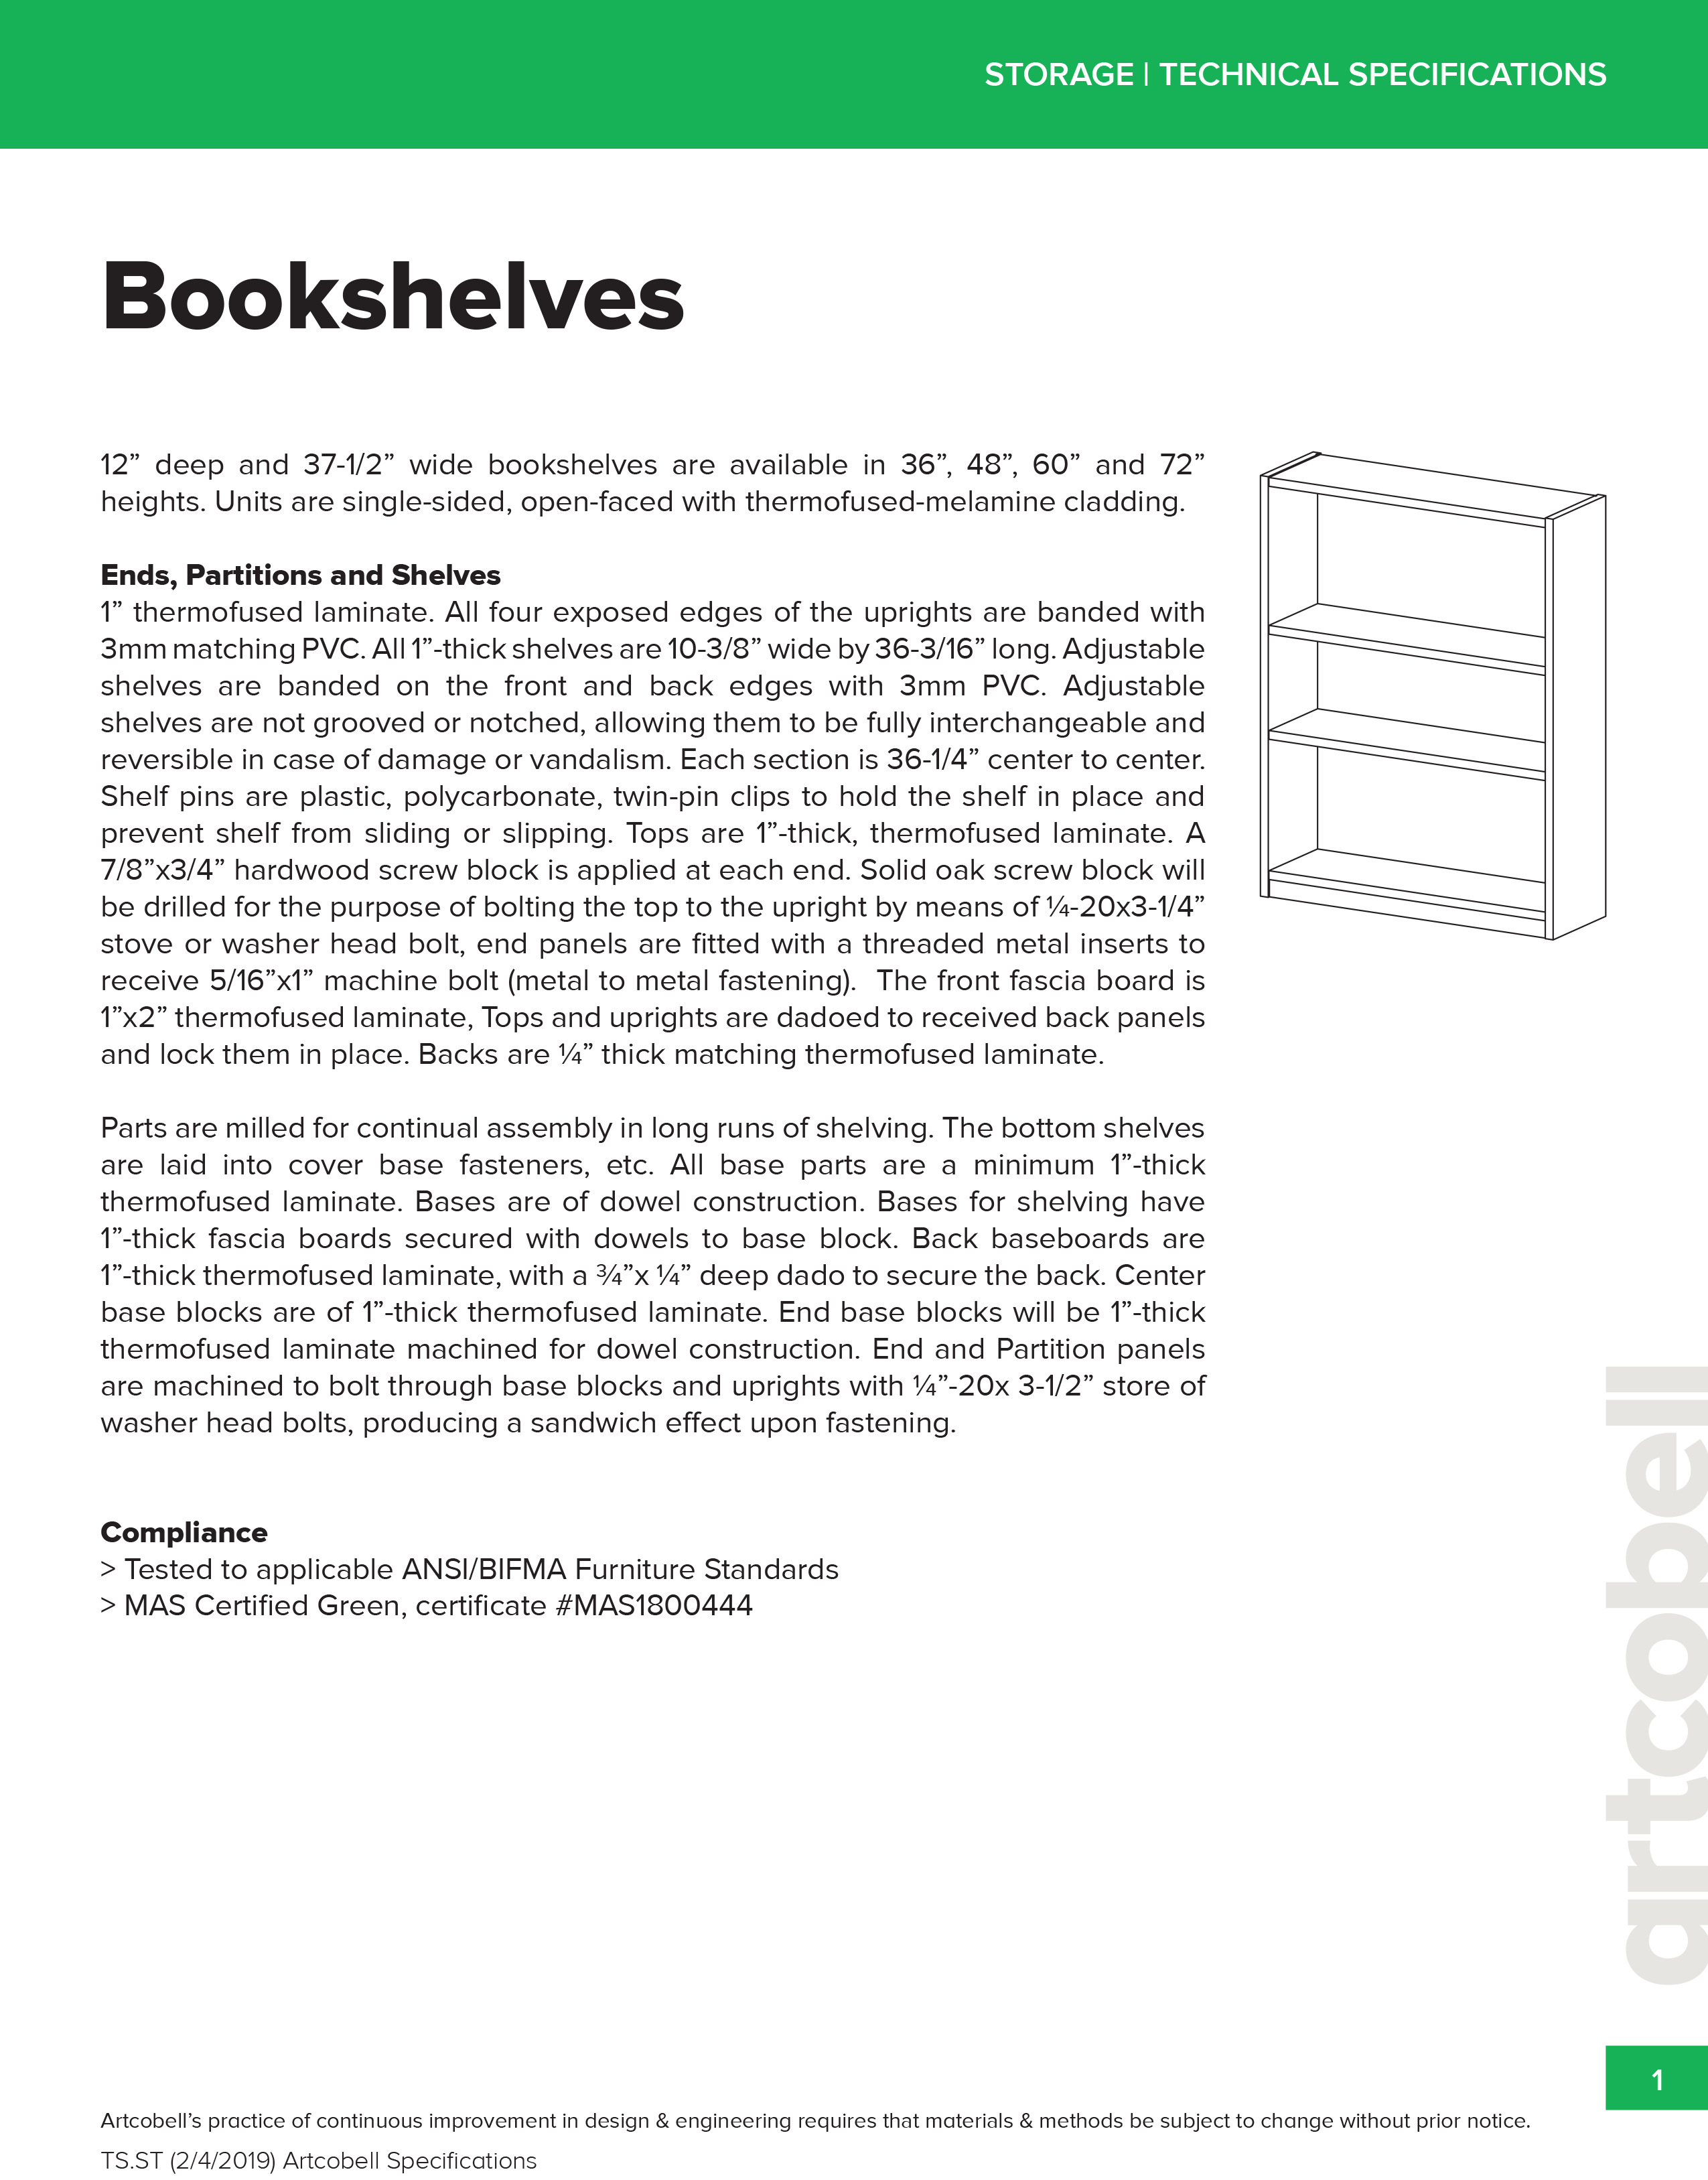 StorageSpecifications_Bookshelves